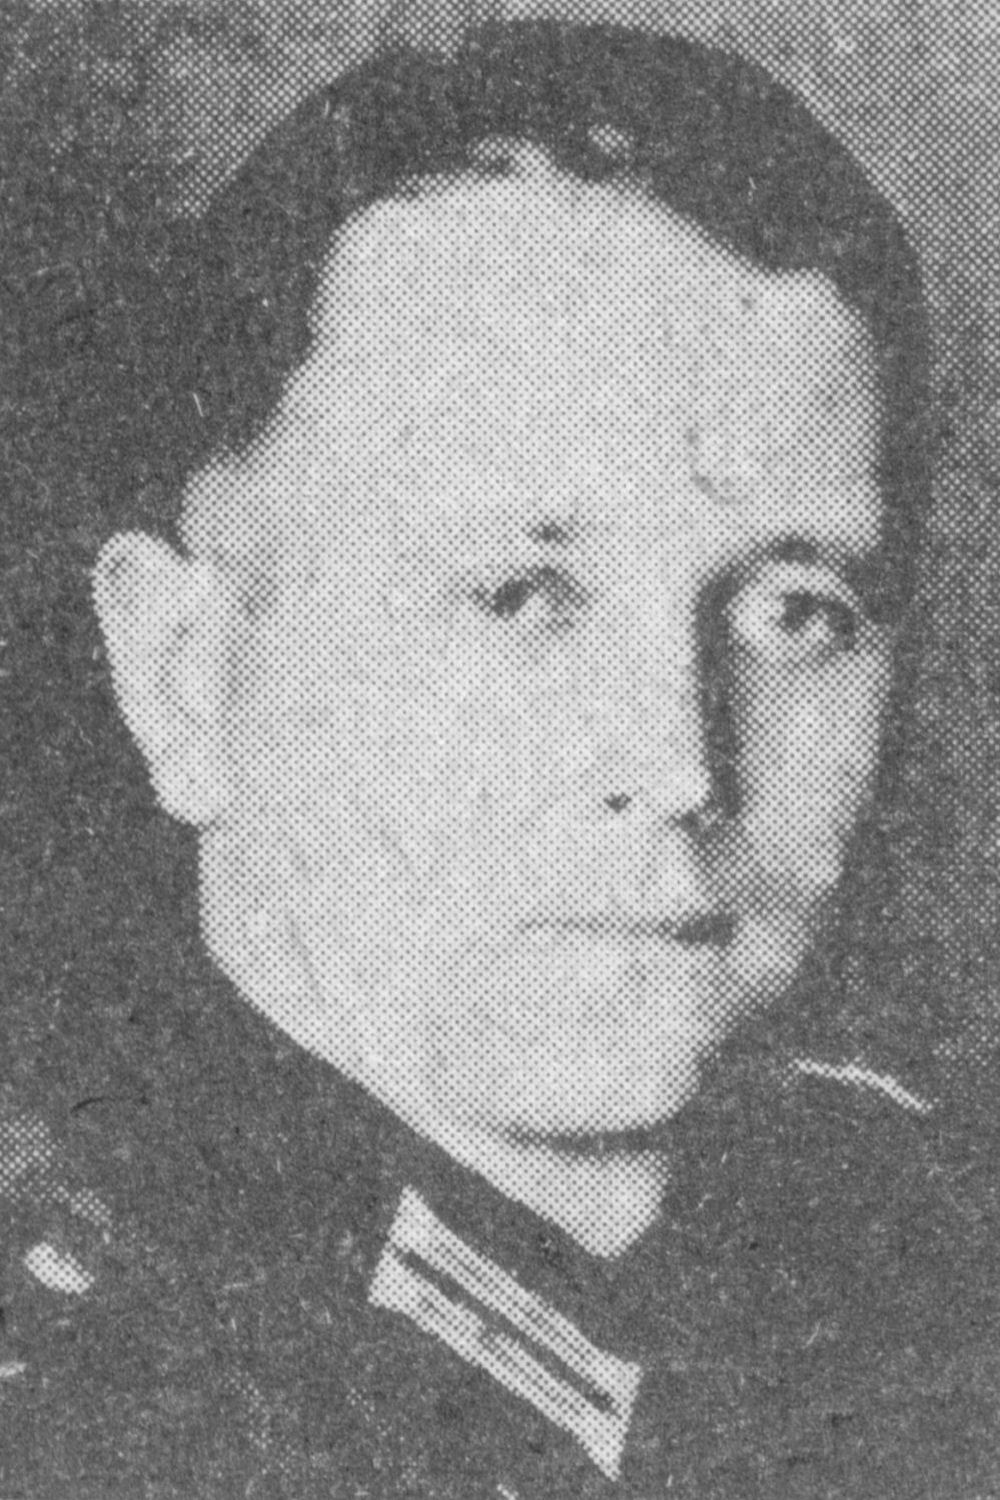 Gronwald Wilhelm